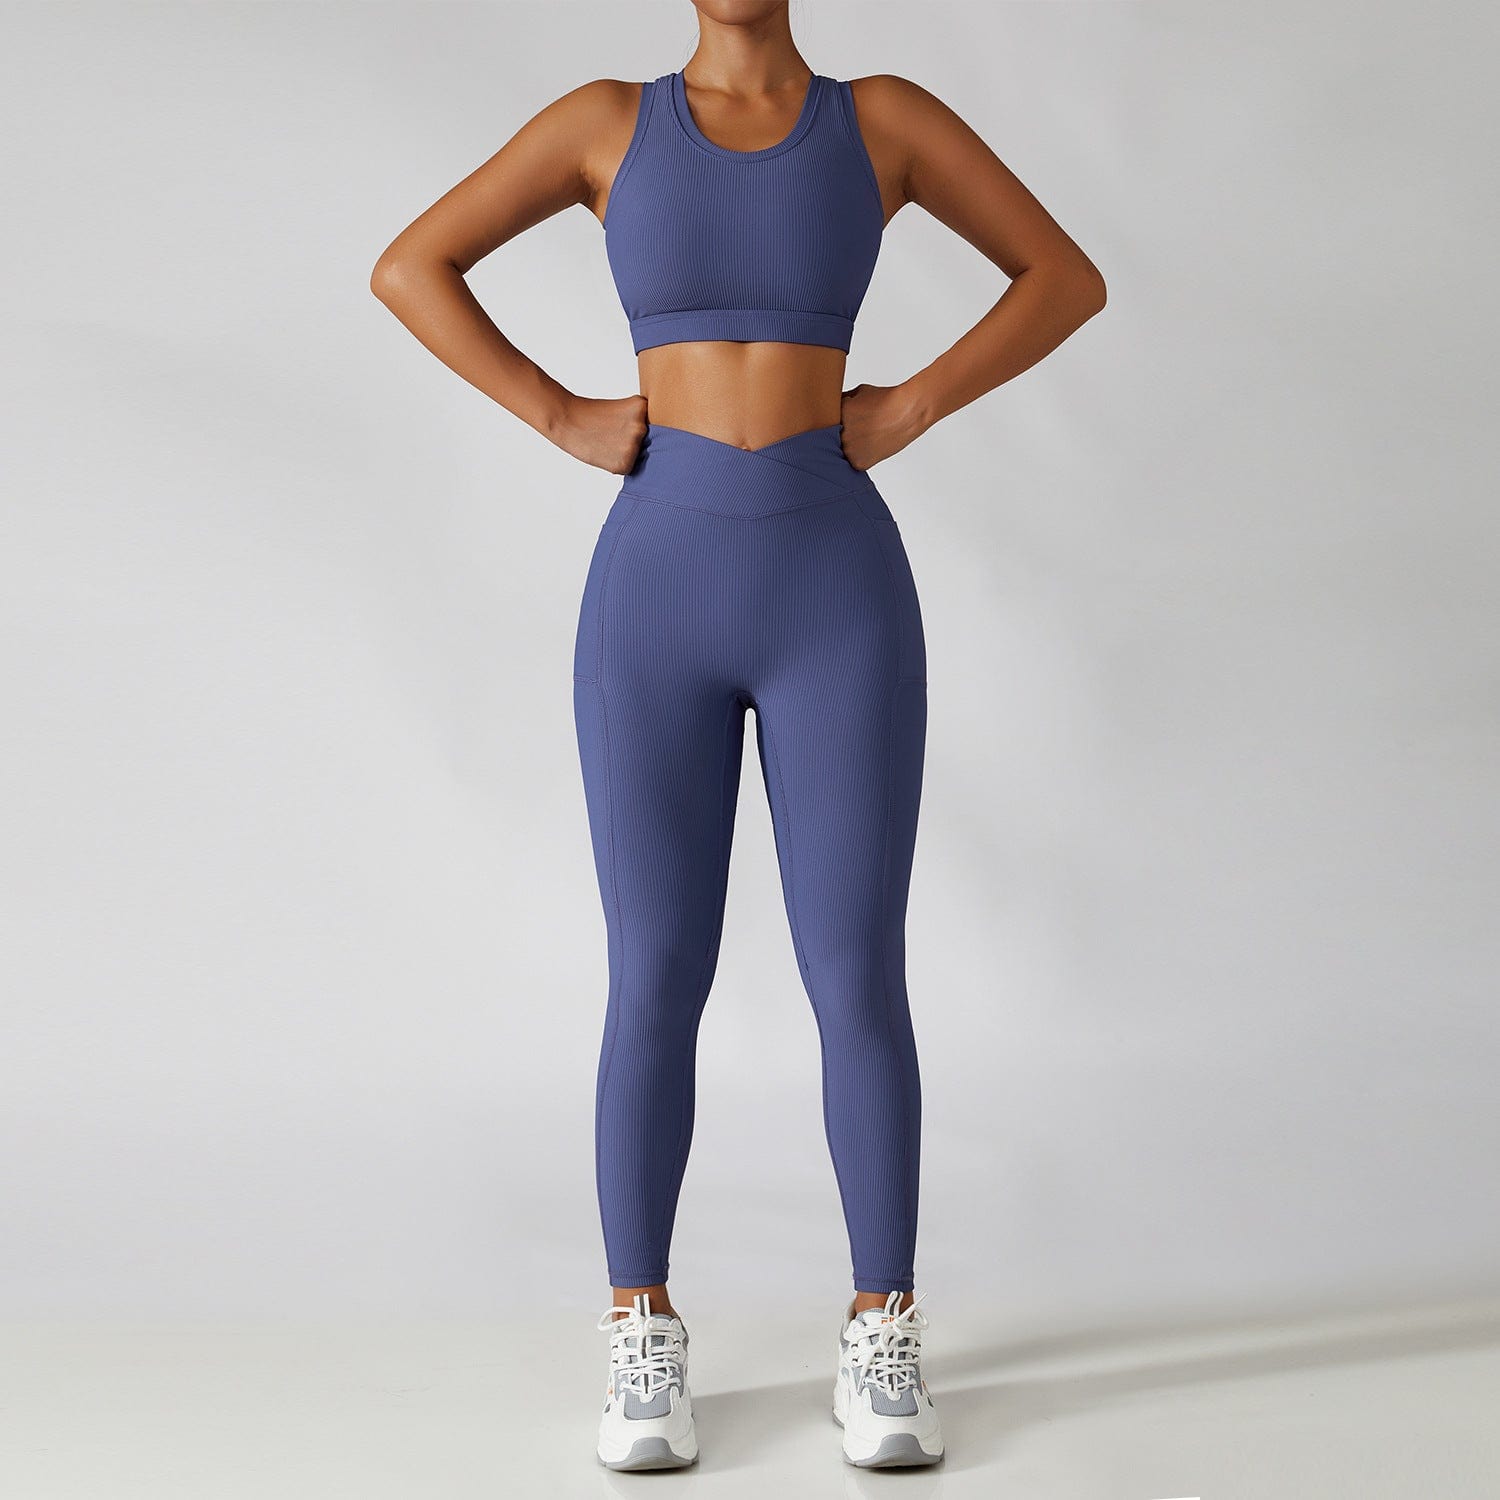 InnateFit FITNESS Glass purple / Vest trousers / S Women's Running Fitness Suit Yoga Clothes CJTZ156149329CX